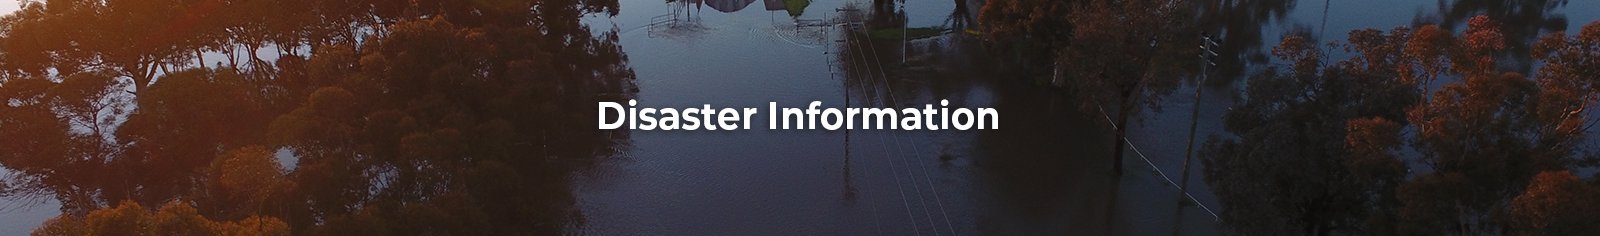 DisasterInformation-WebBanner